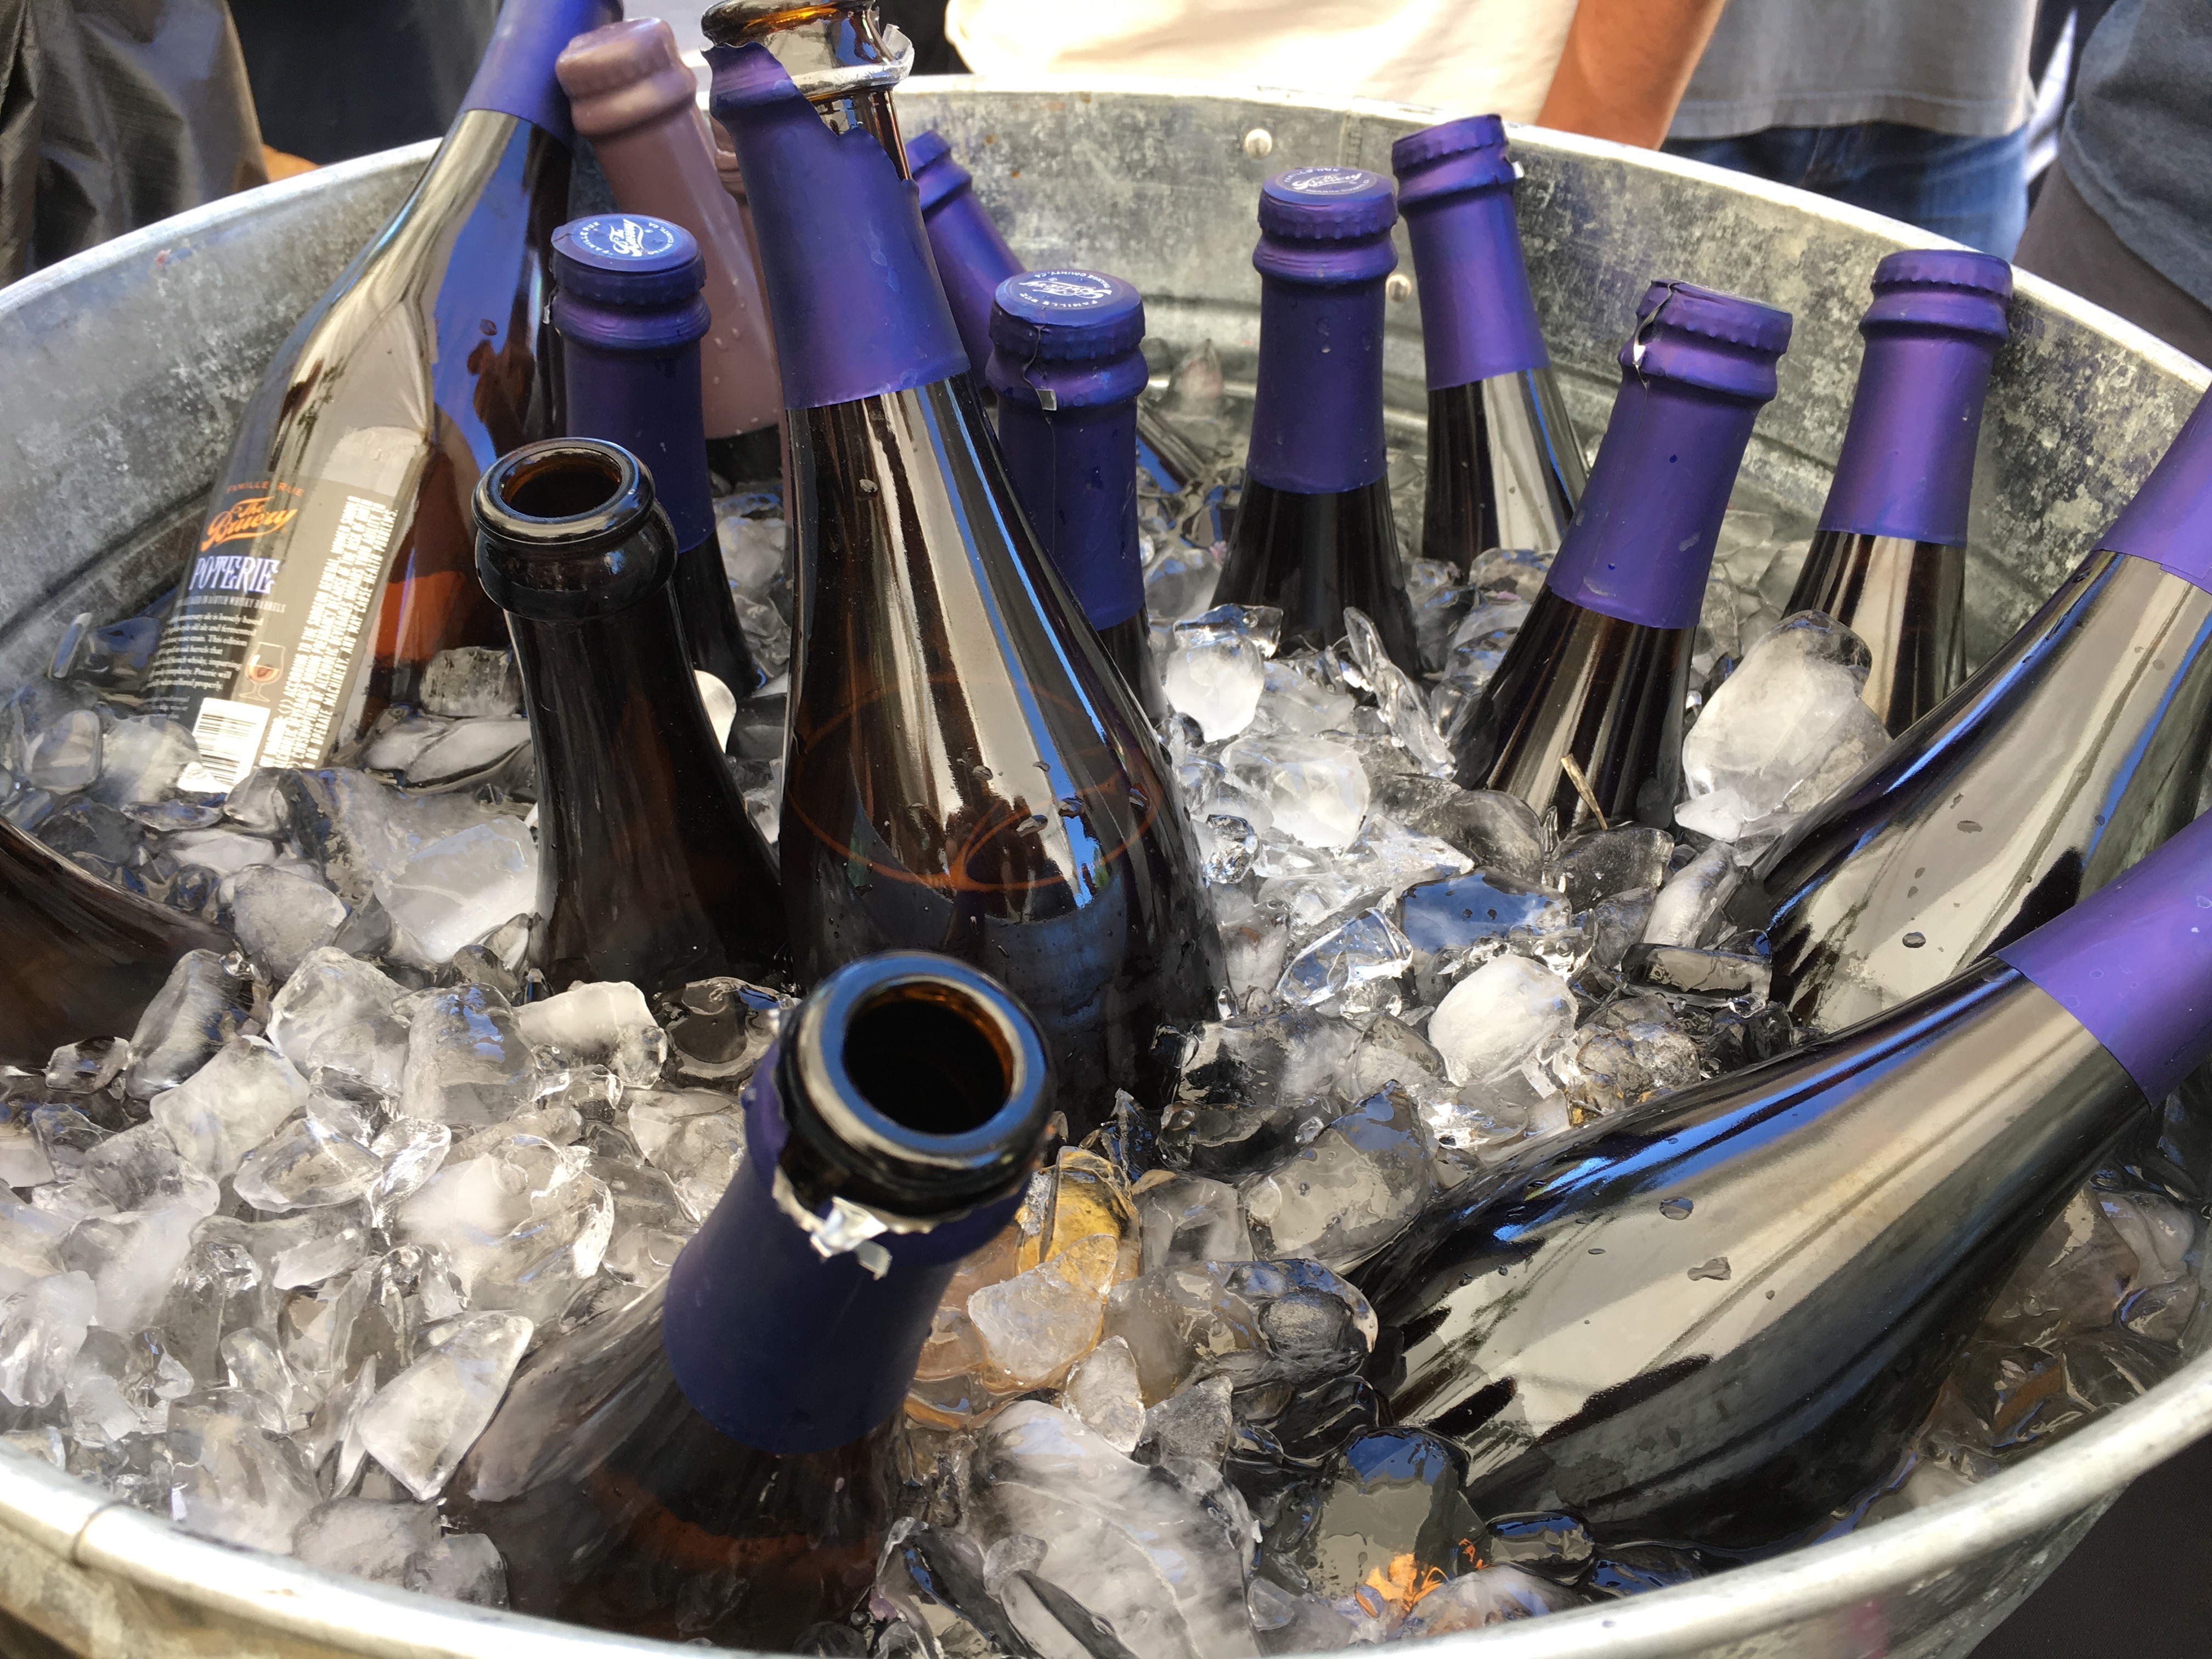 Bottles of many rare offerings from The Bruery during the 2016 Firestone Walker Invitational Beer Fest.